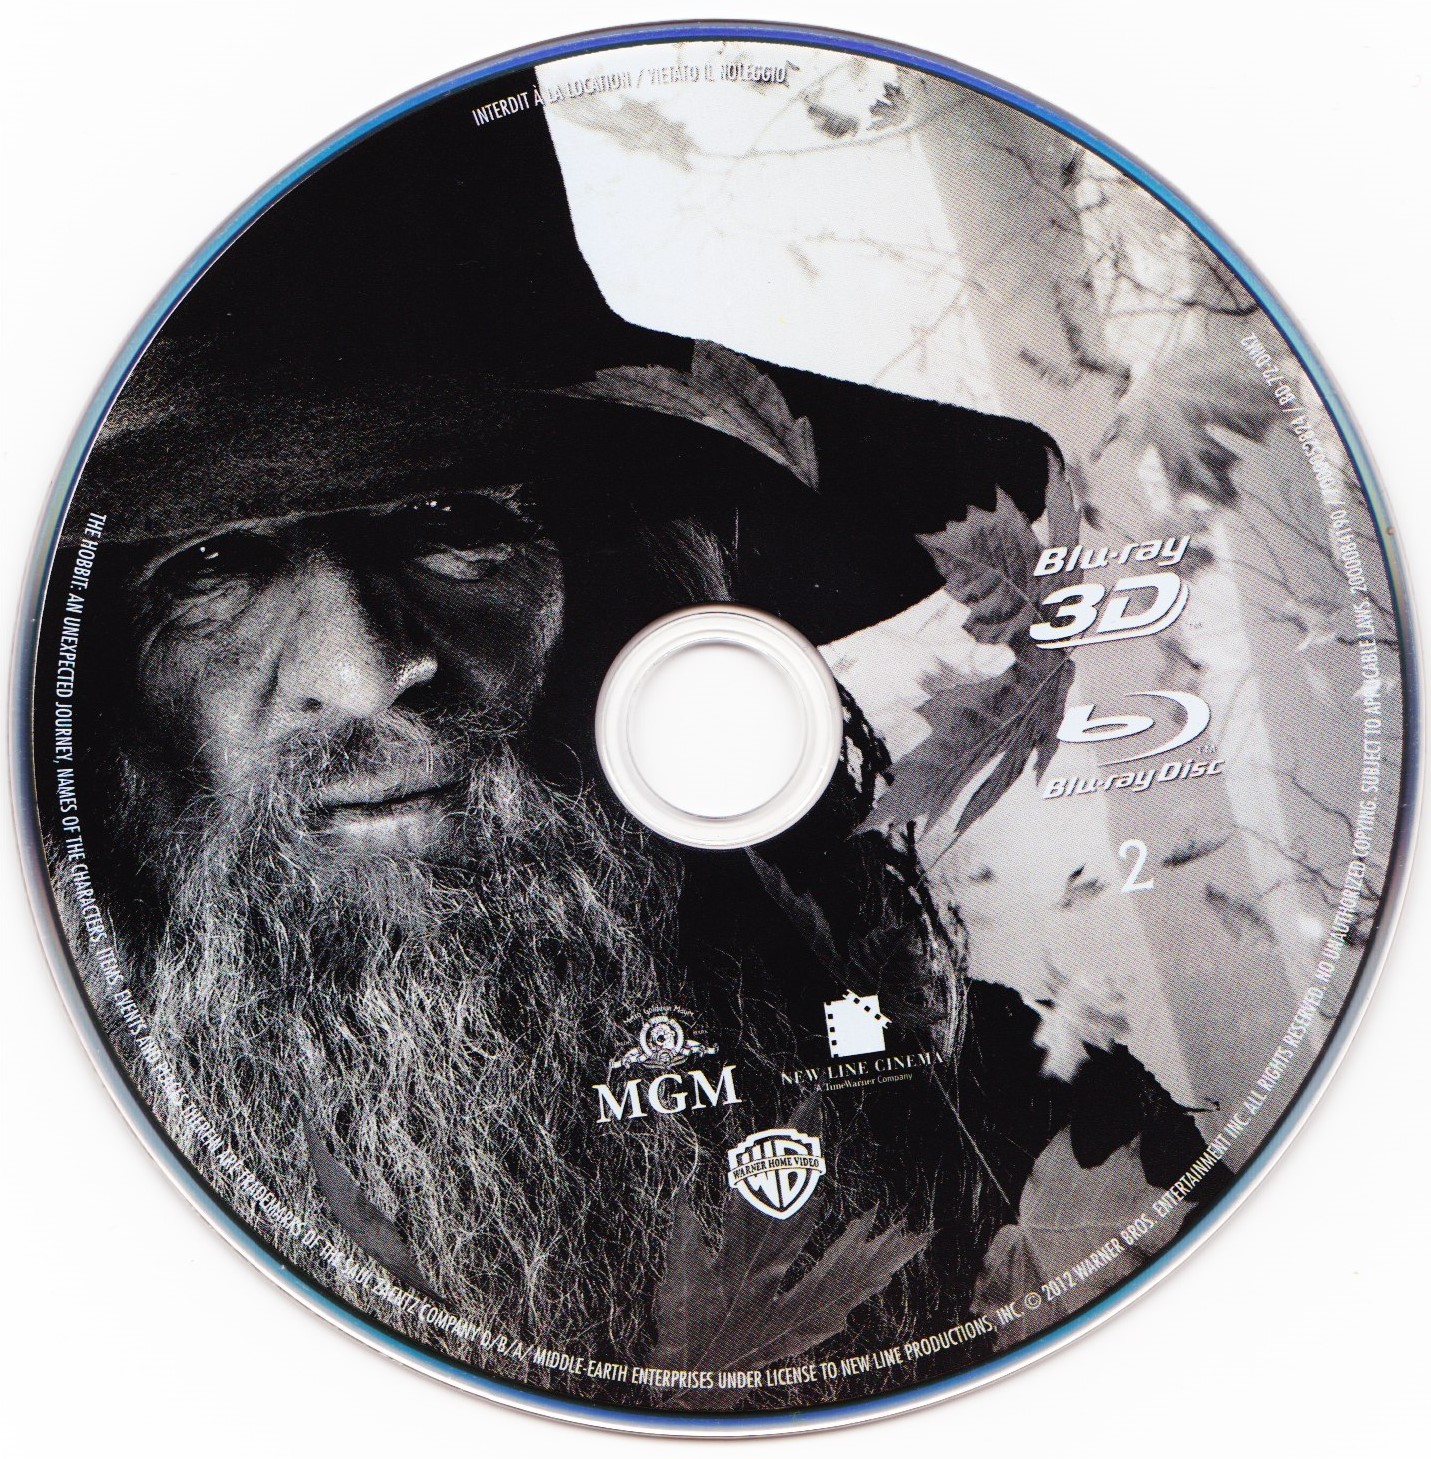 Le Hobbit un voyage inattendu DISC 2 (BLU-RAY)